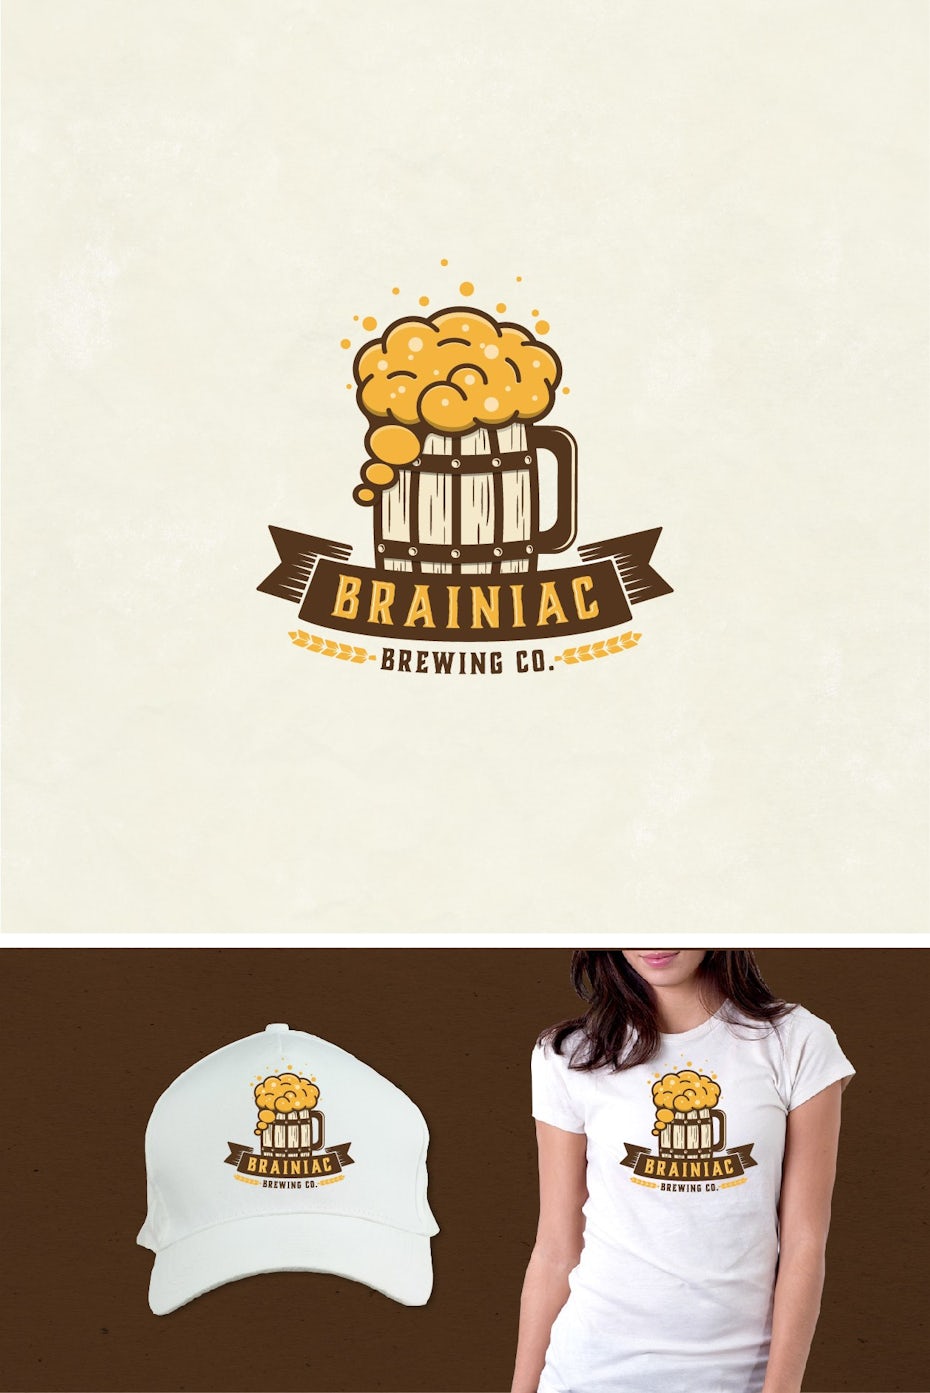 Brainiac Brewing Co. logo